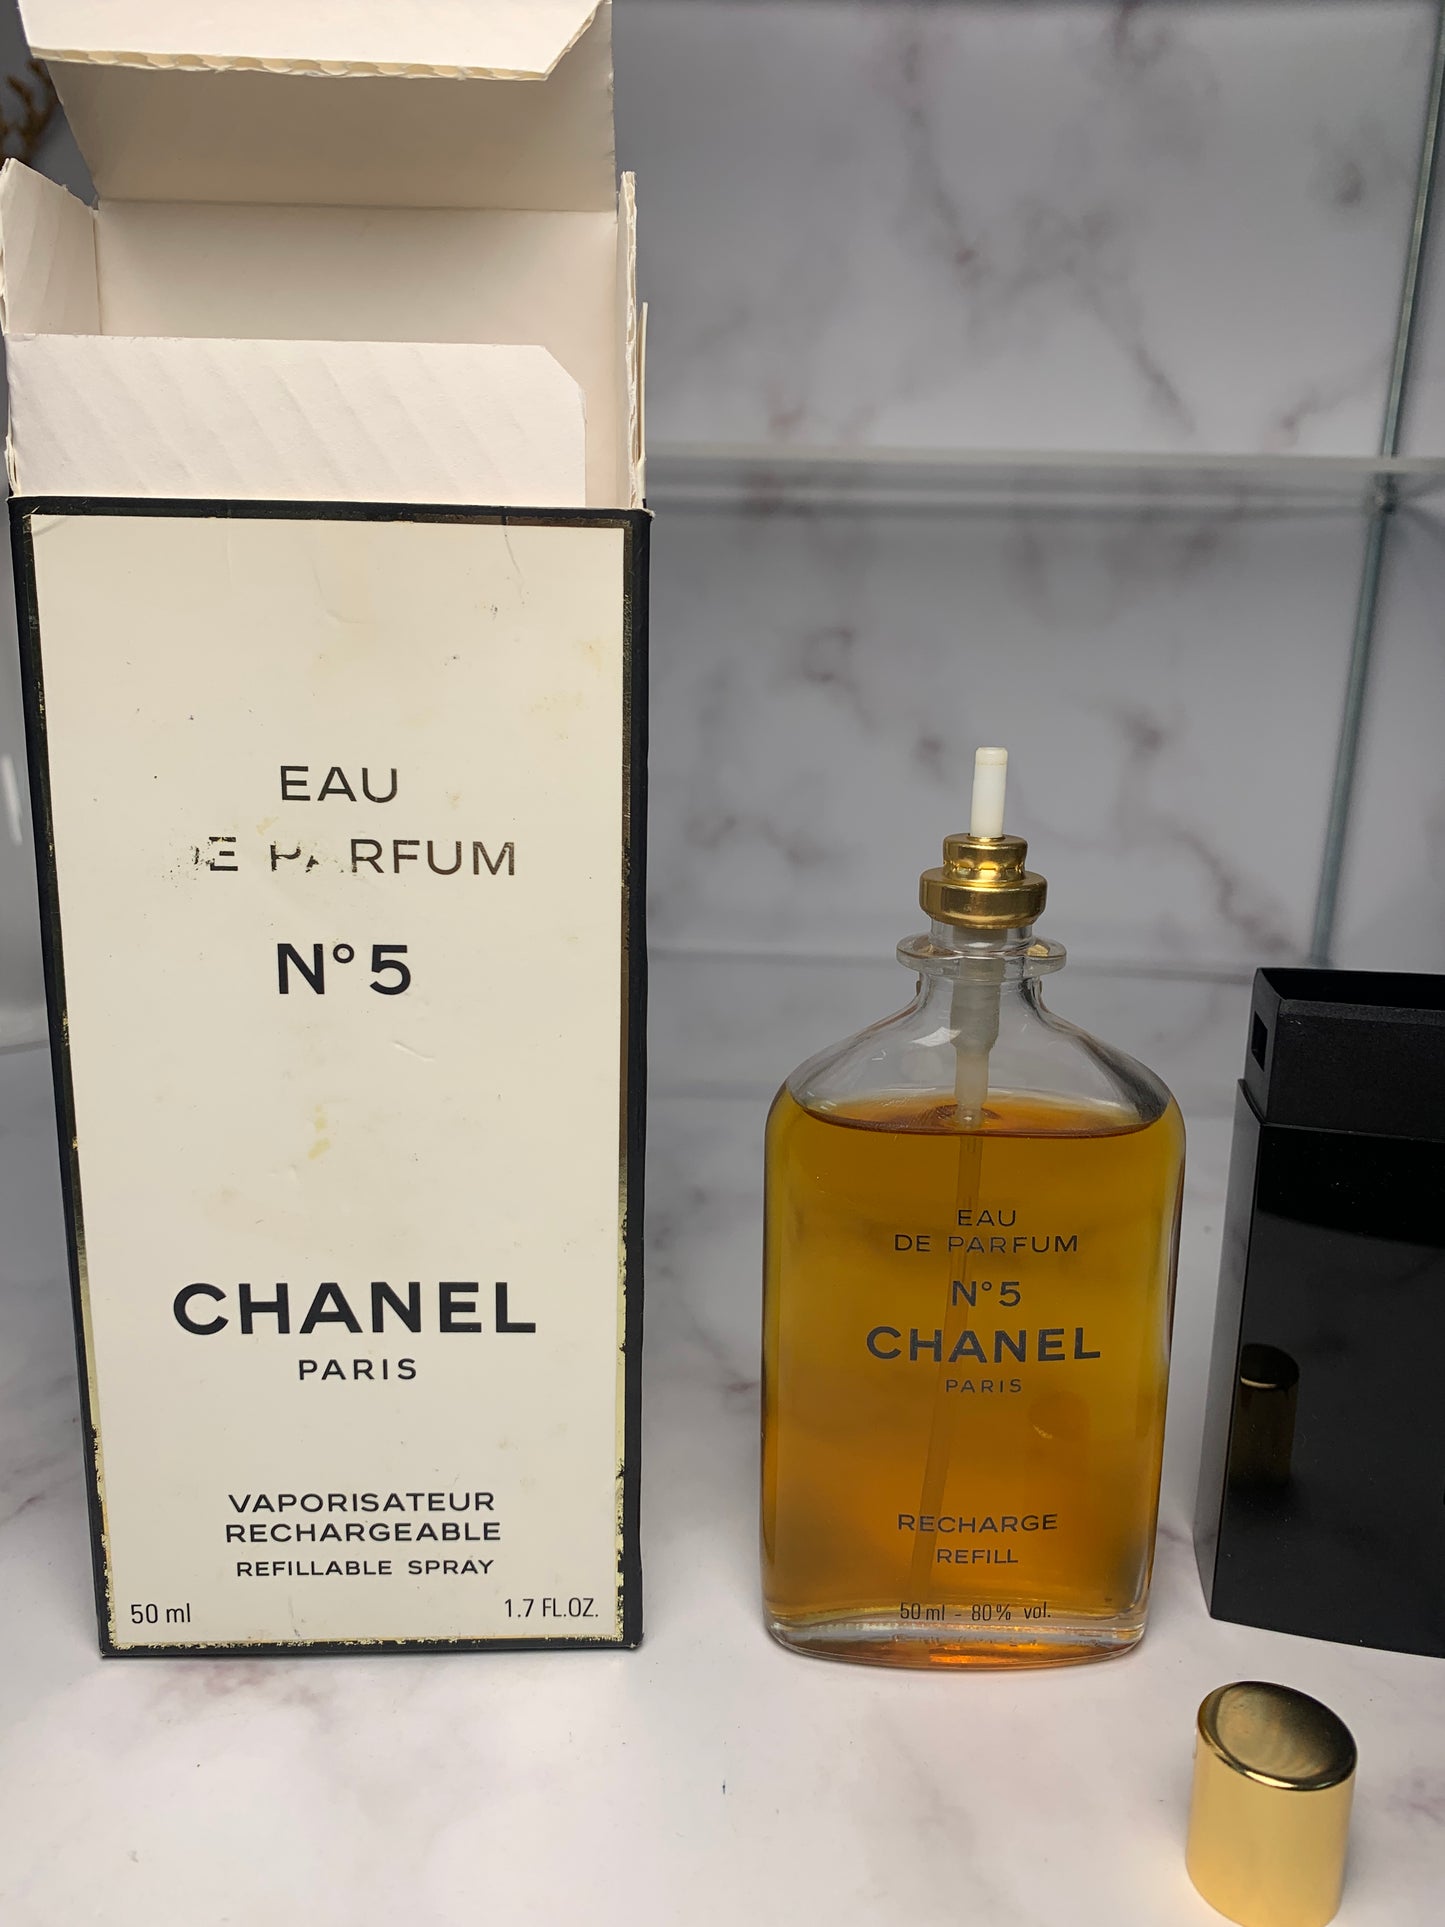 Chanel No 5 Eau de Toilette refillable spray 50ml - Vinted